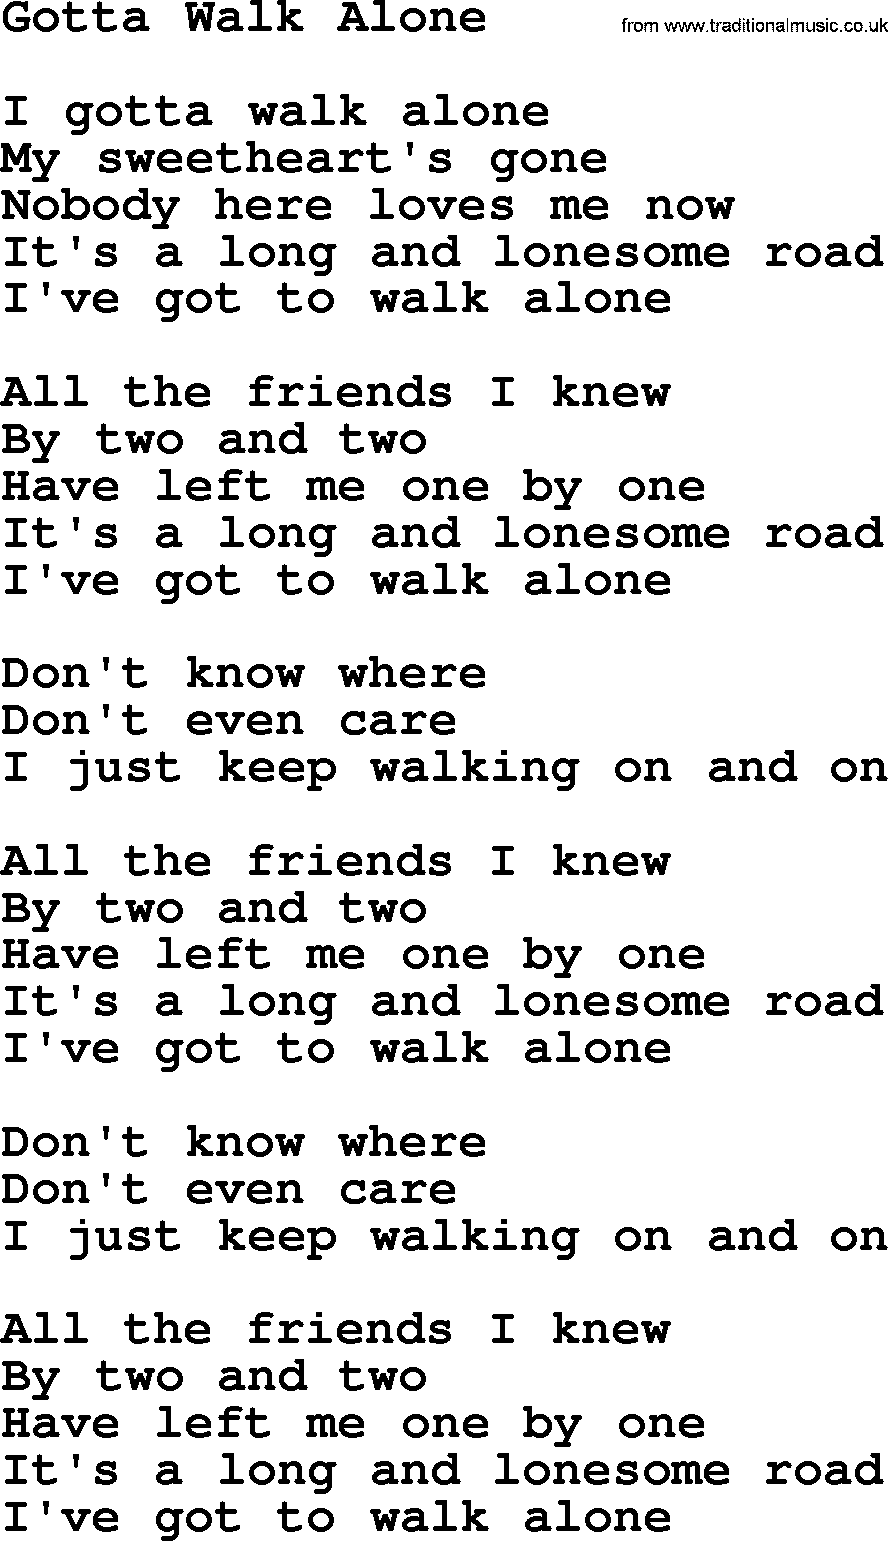 Willie Nelson song: Gotta Walk Alone lyrics